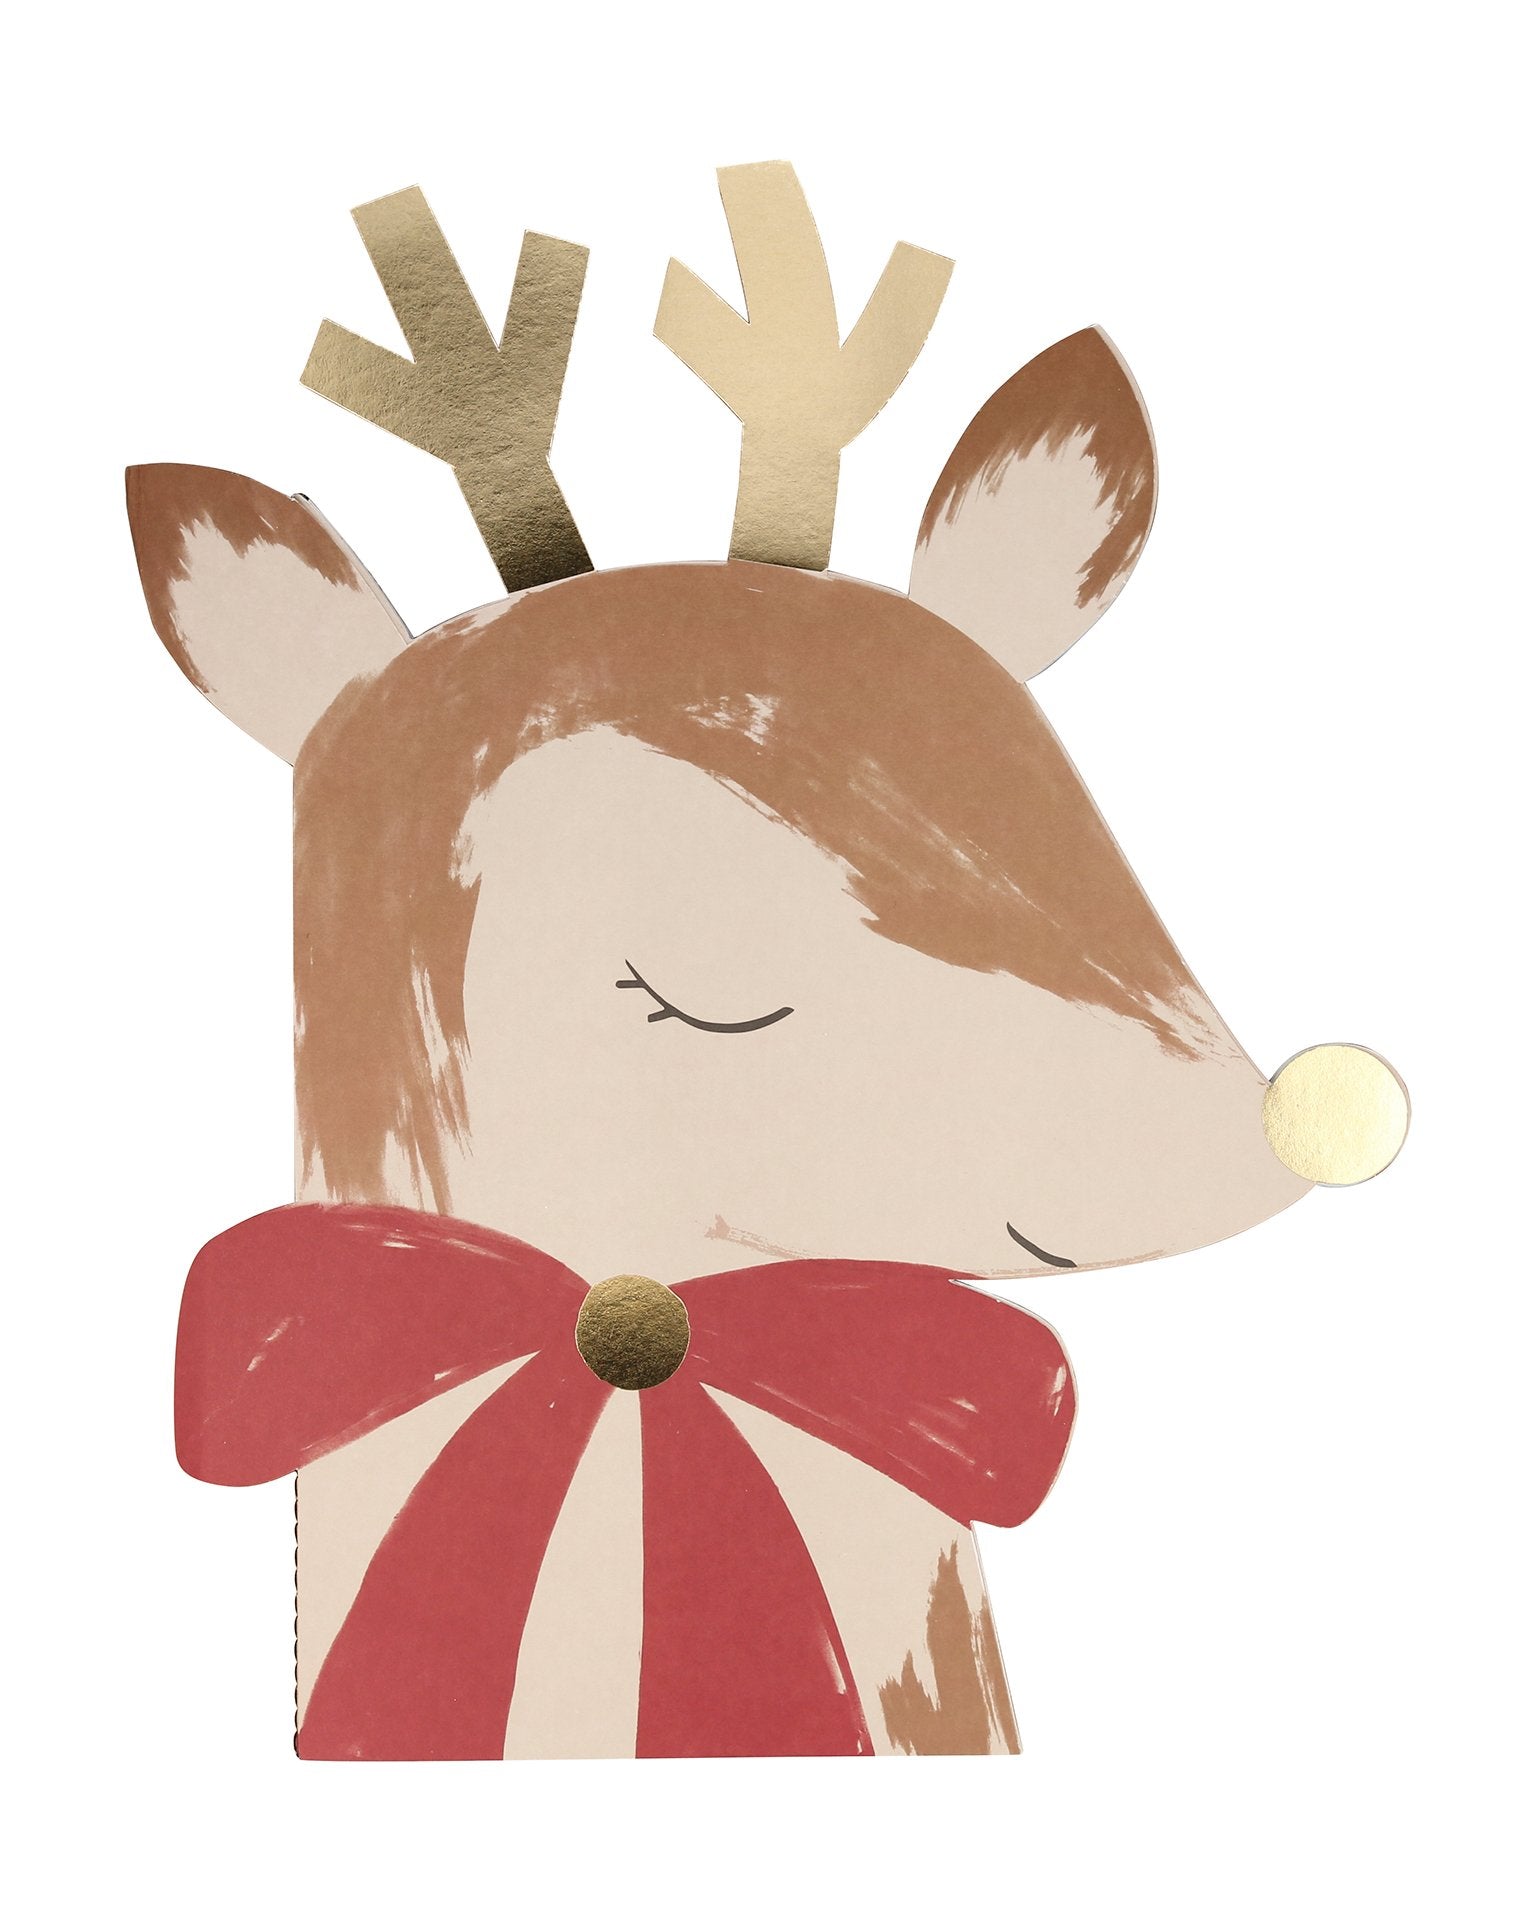 Little meri meri arts+crafts reindeer sticker sketchbook